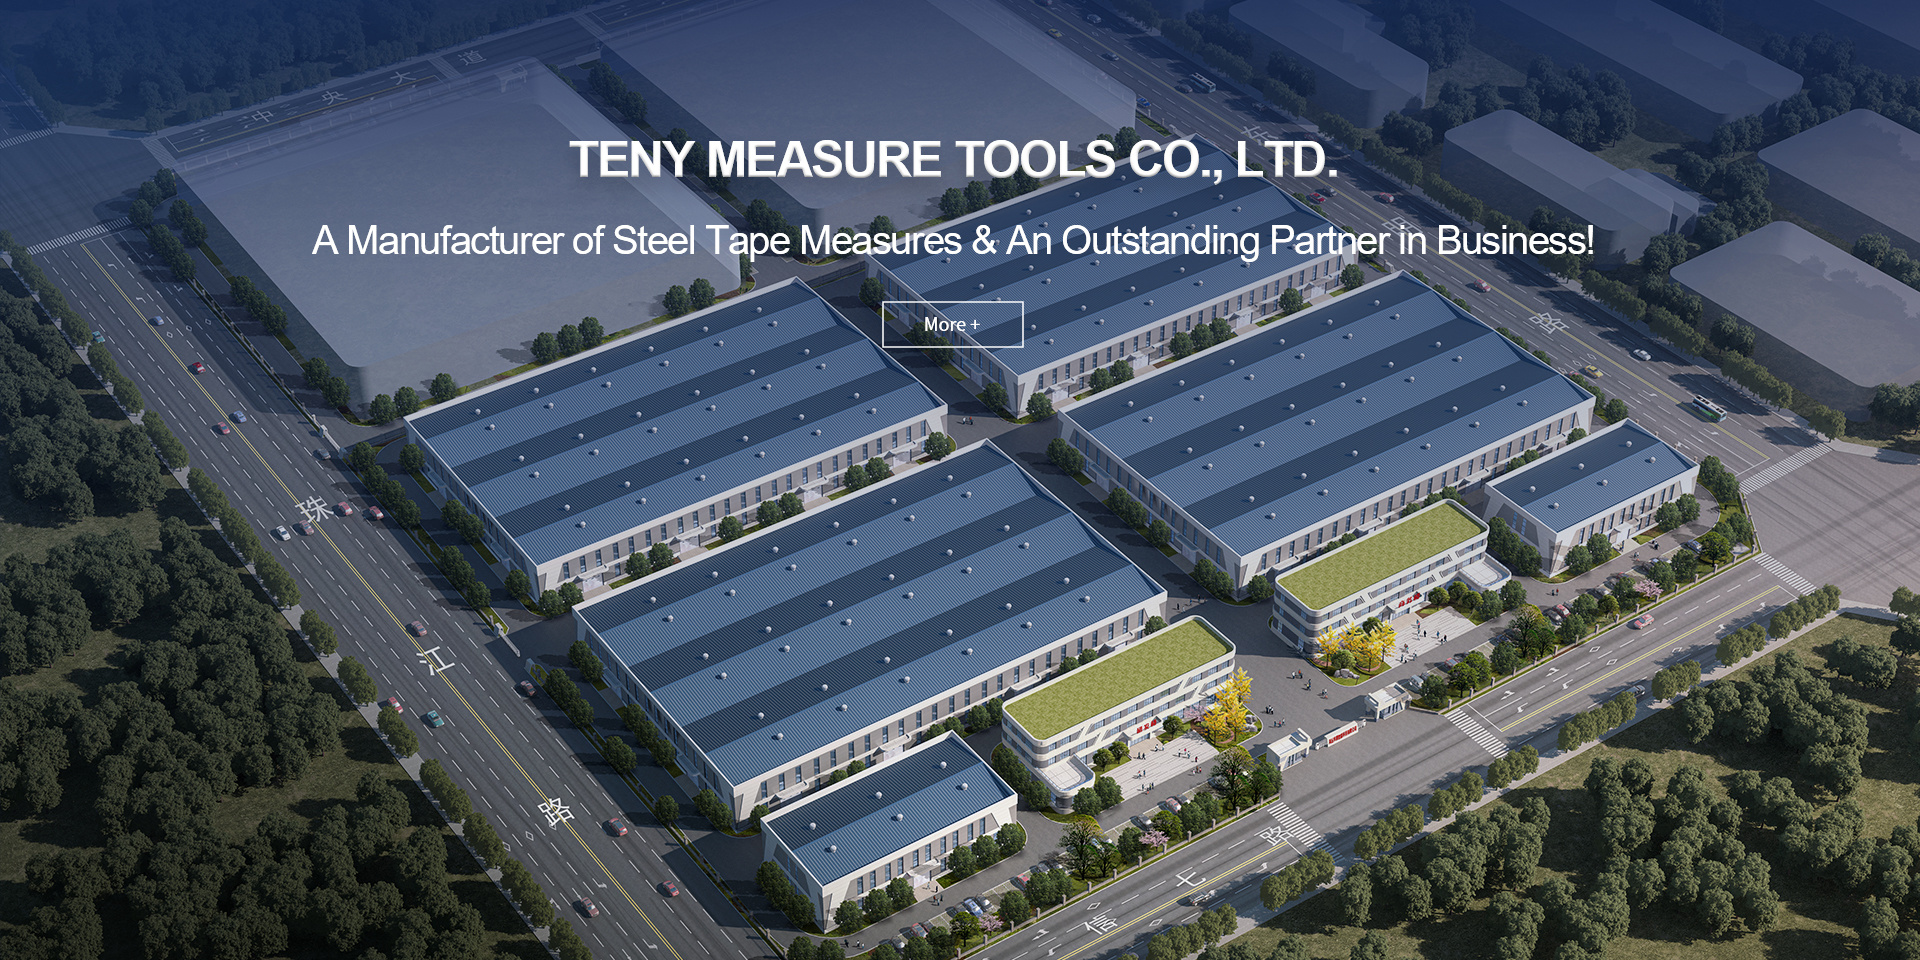 Yucheng Tianli Measuring Tools Co., Ltd.